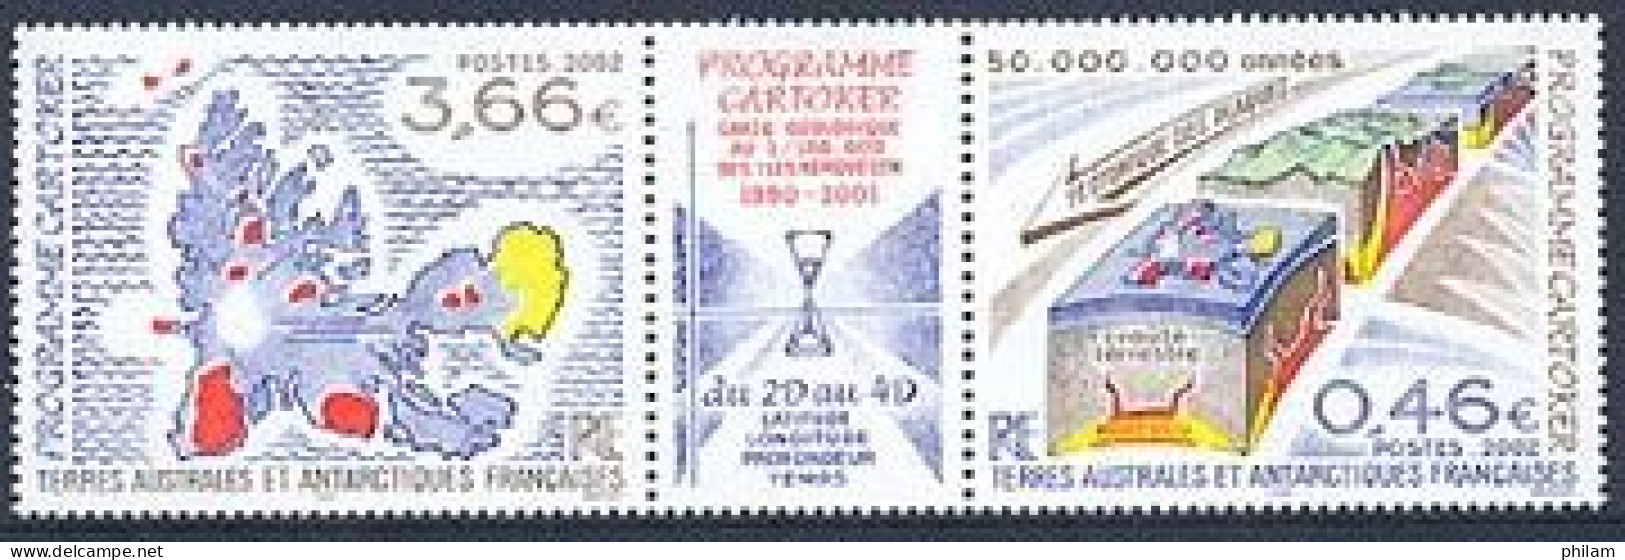 TAAF 2002 - Programe Cartoker - Géologie - Unused Stamps